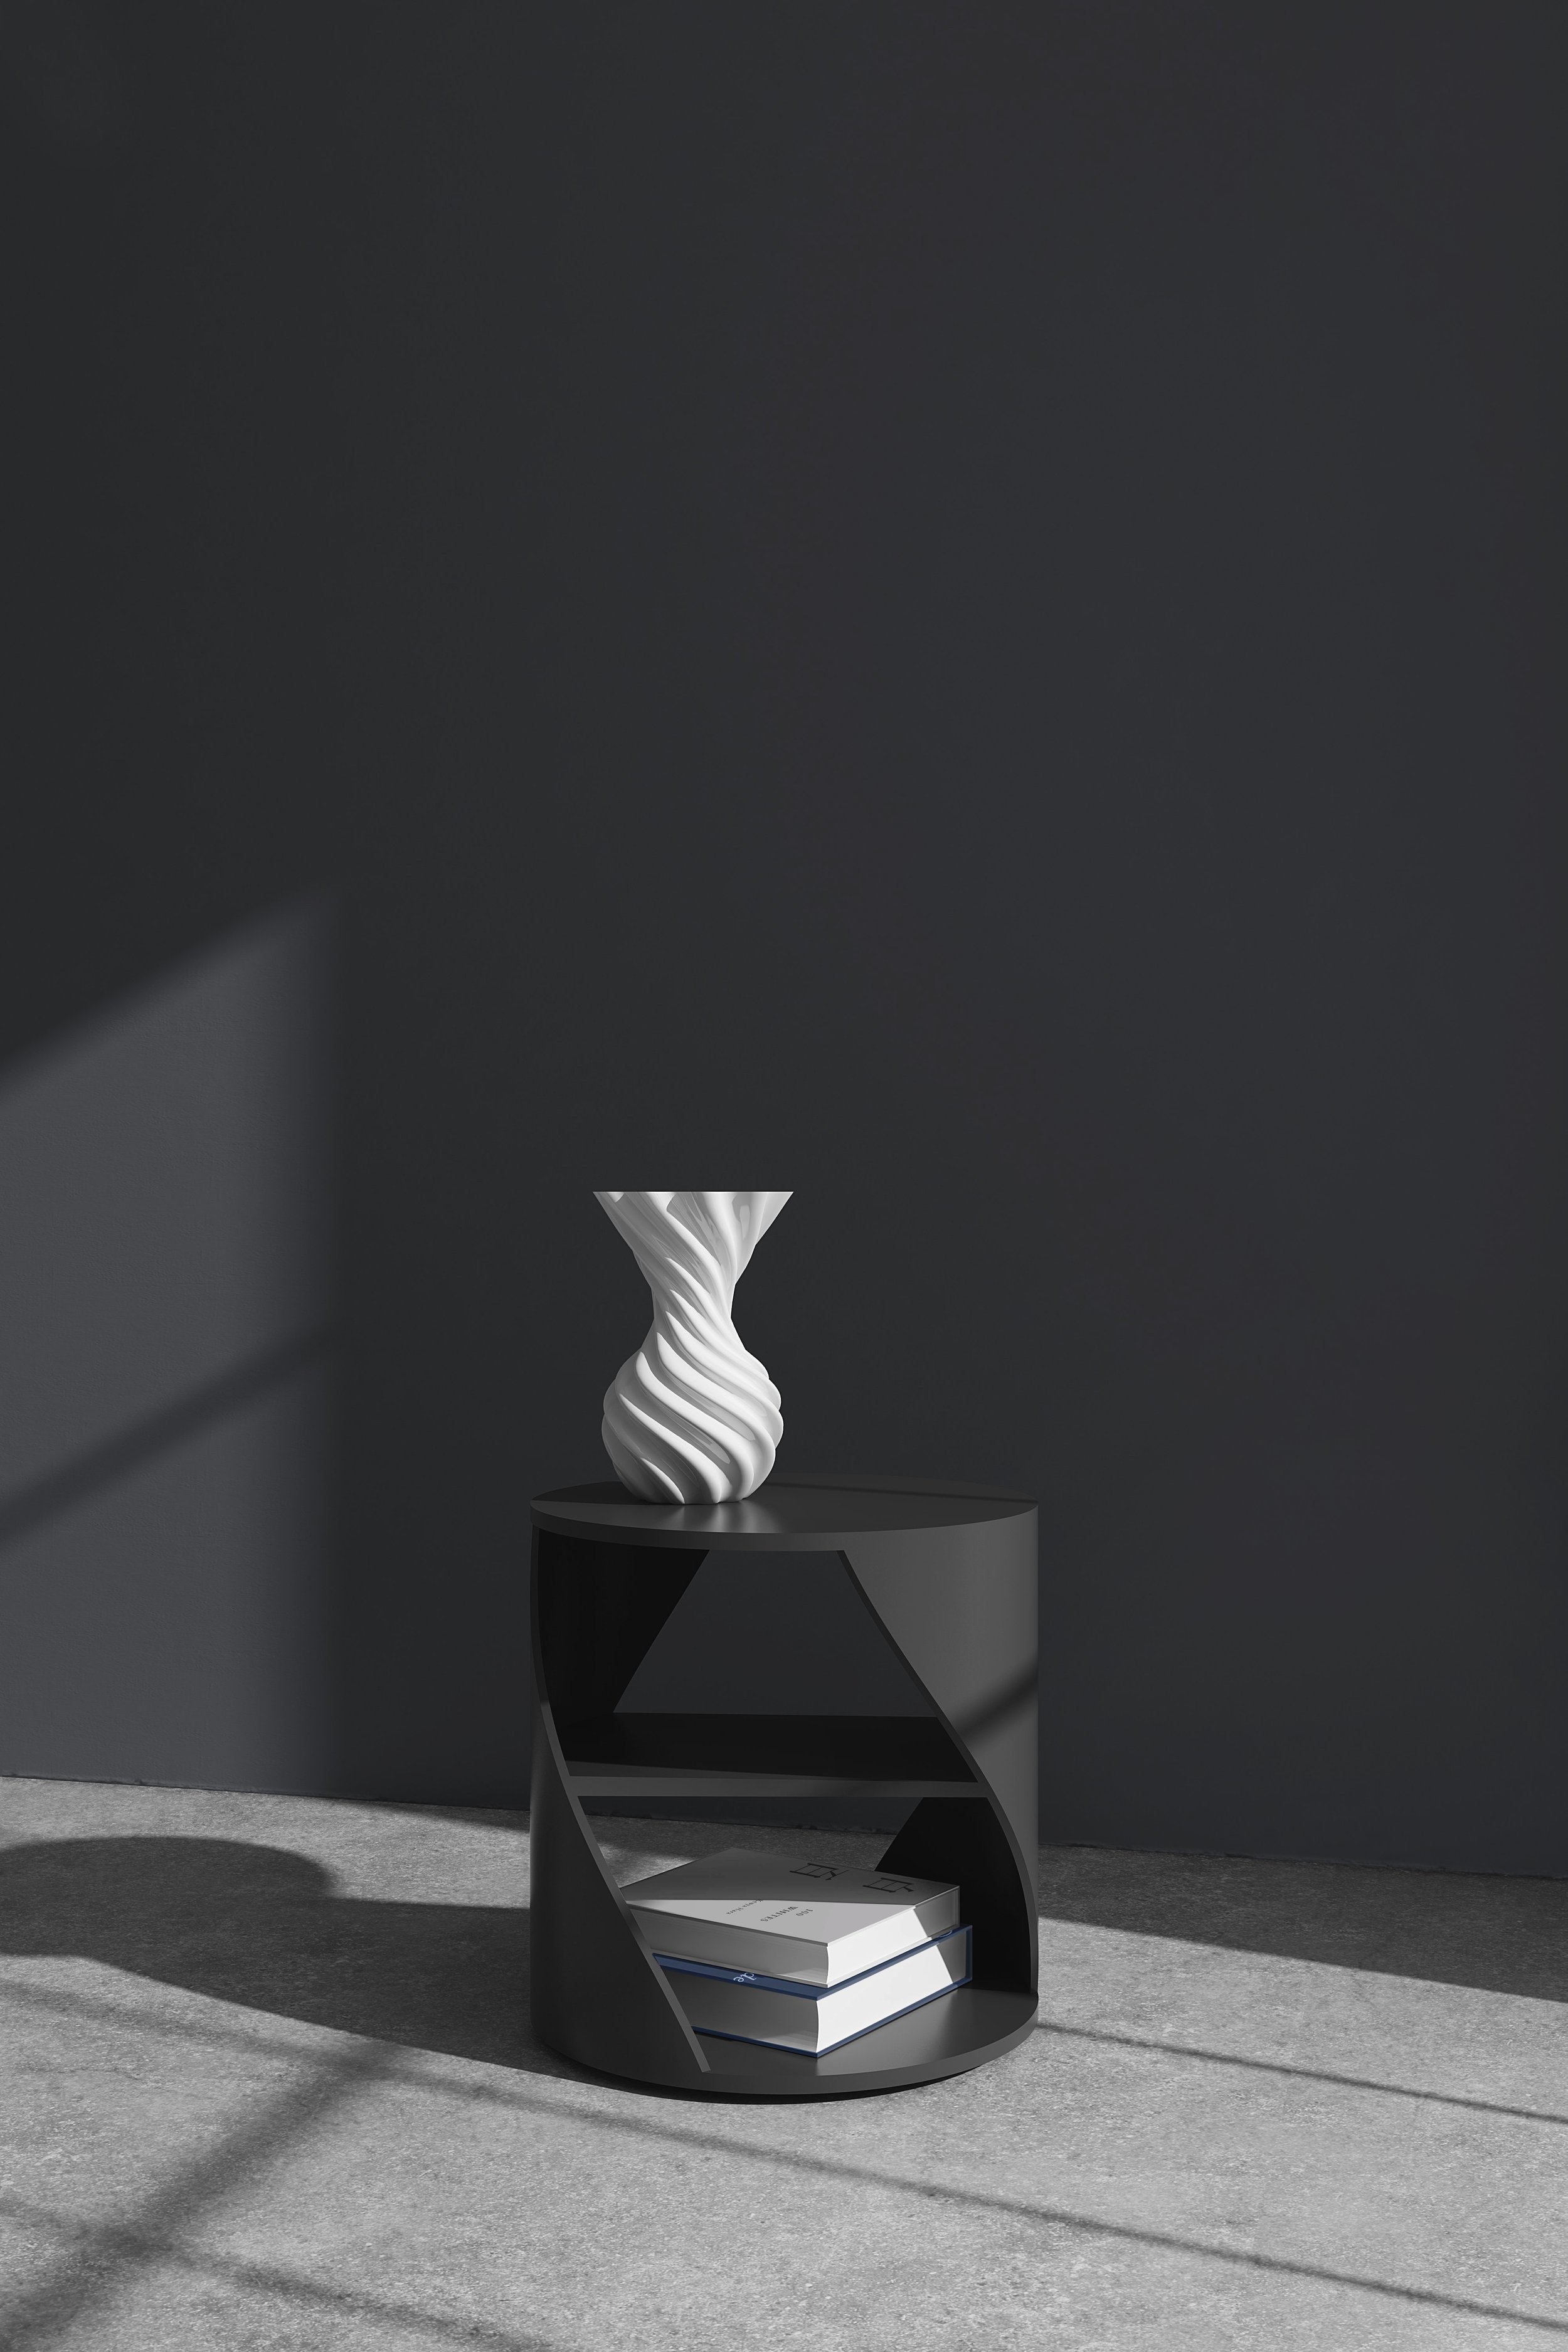 Mydna side table in black by Joel Escalona for Nono — 01.jpg